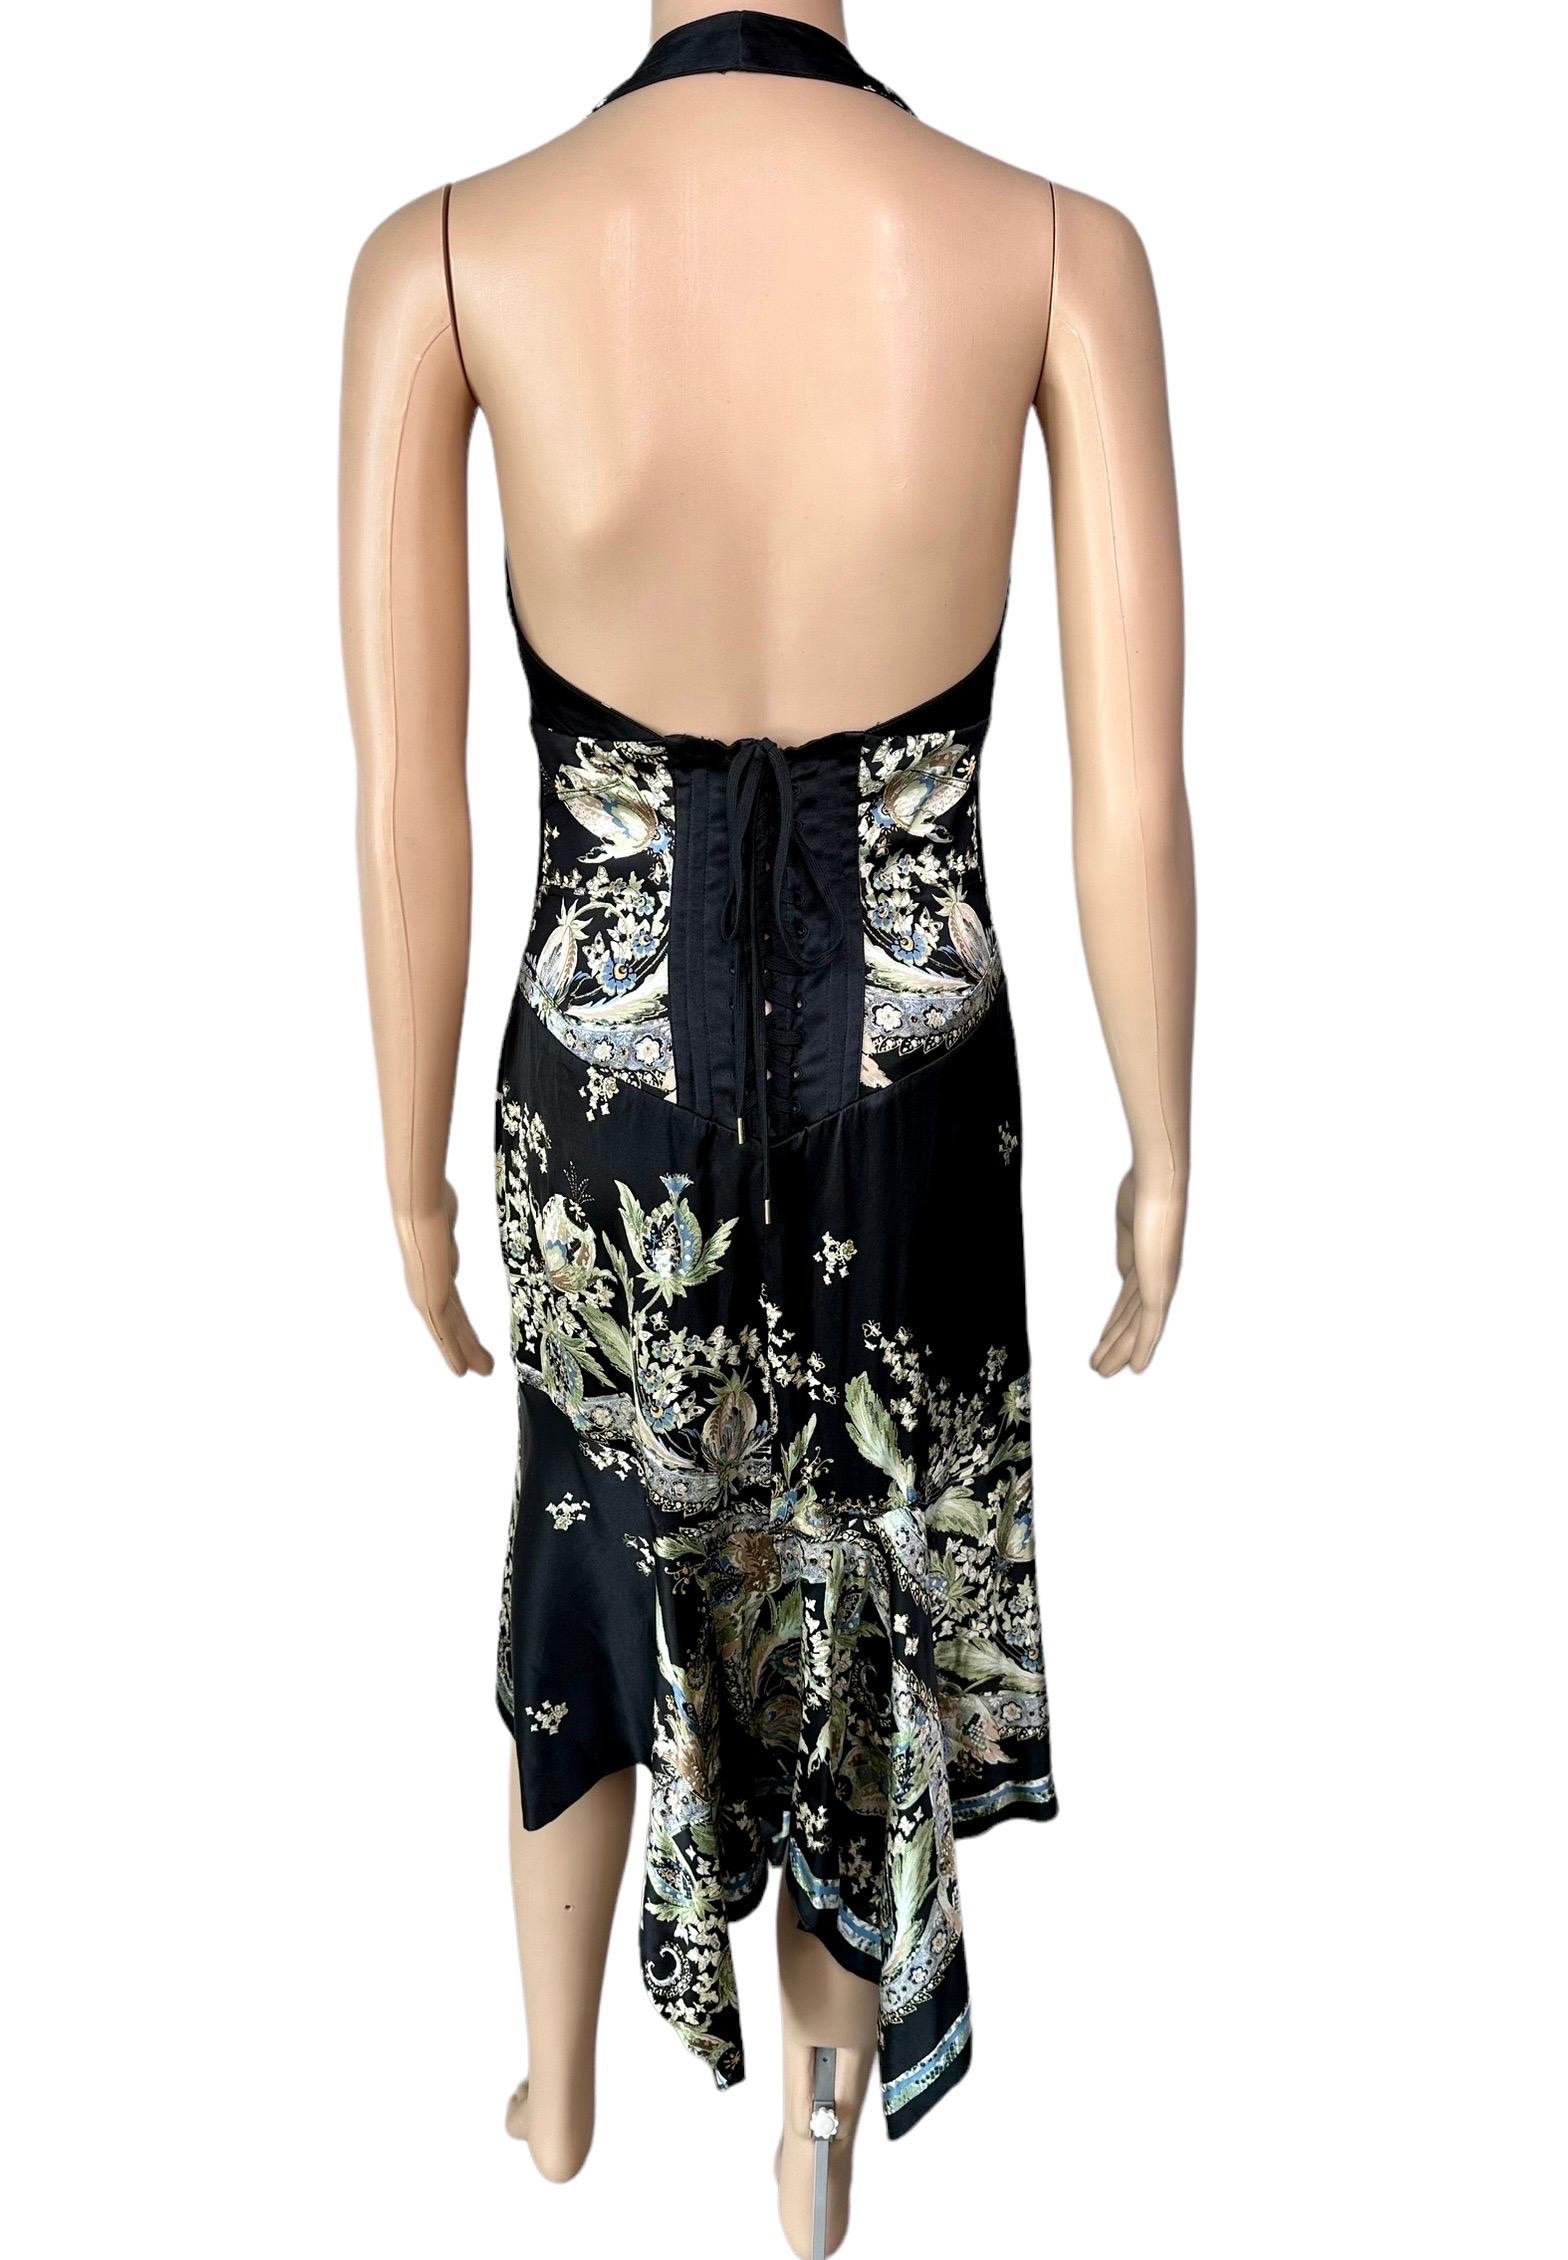 Roberto Cavalli S/S 2003 Corset Lace Up Chinoiserie Print Silk Asymmetric Dress For Sale 2